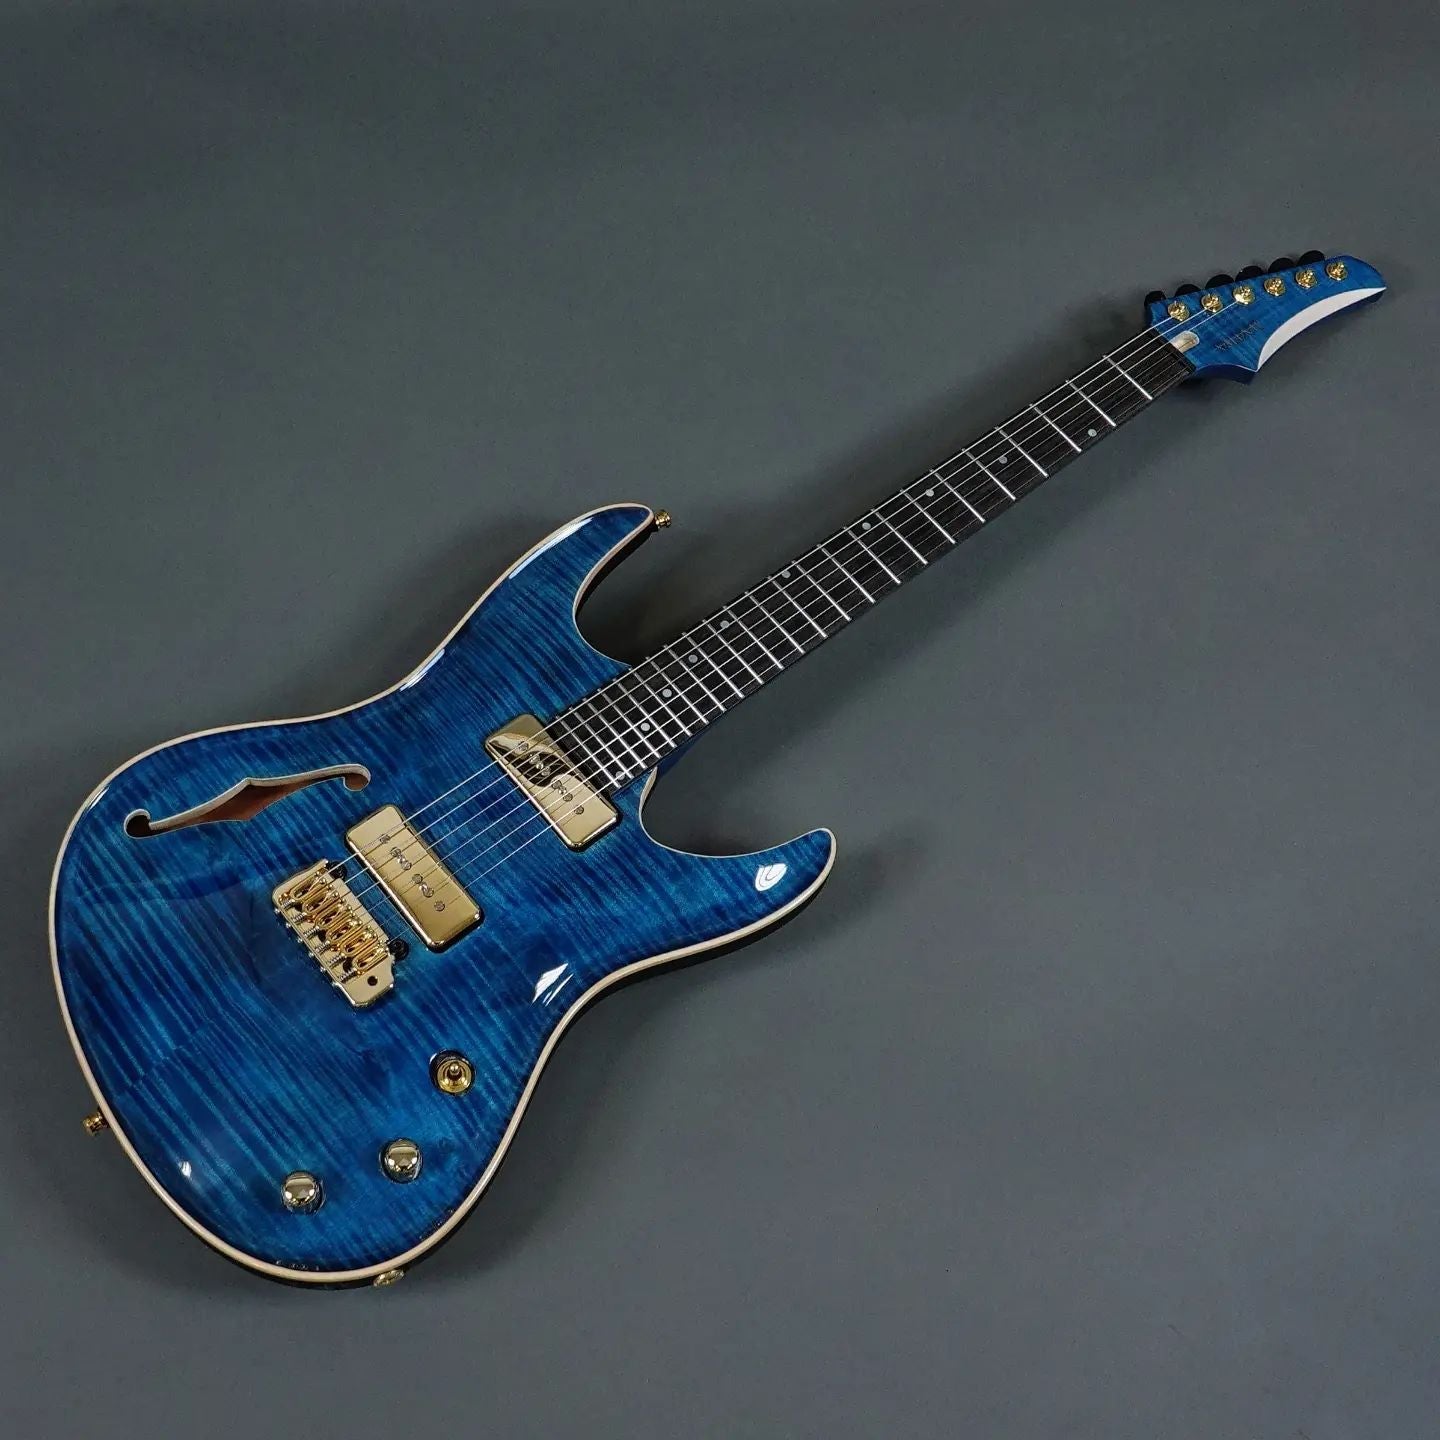 Valenti Nebula Carved Semi Hollow P90 Dark Blue, Electric Guitar for sale at Richards Guitars.